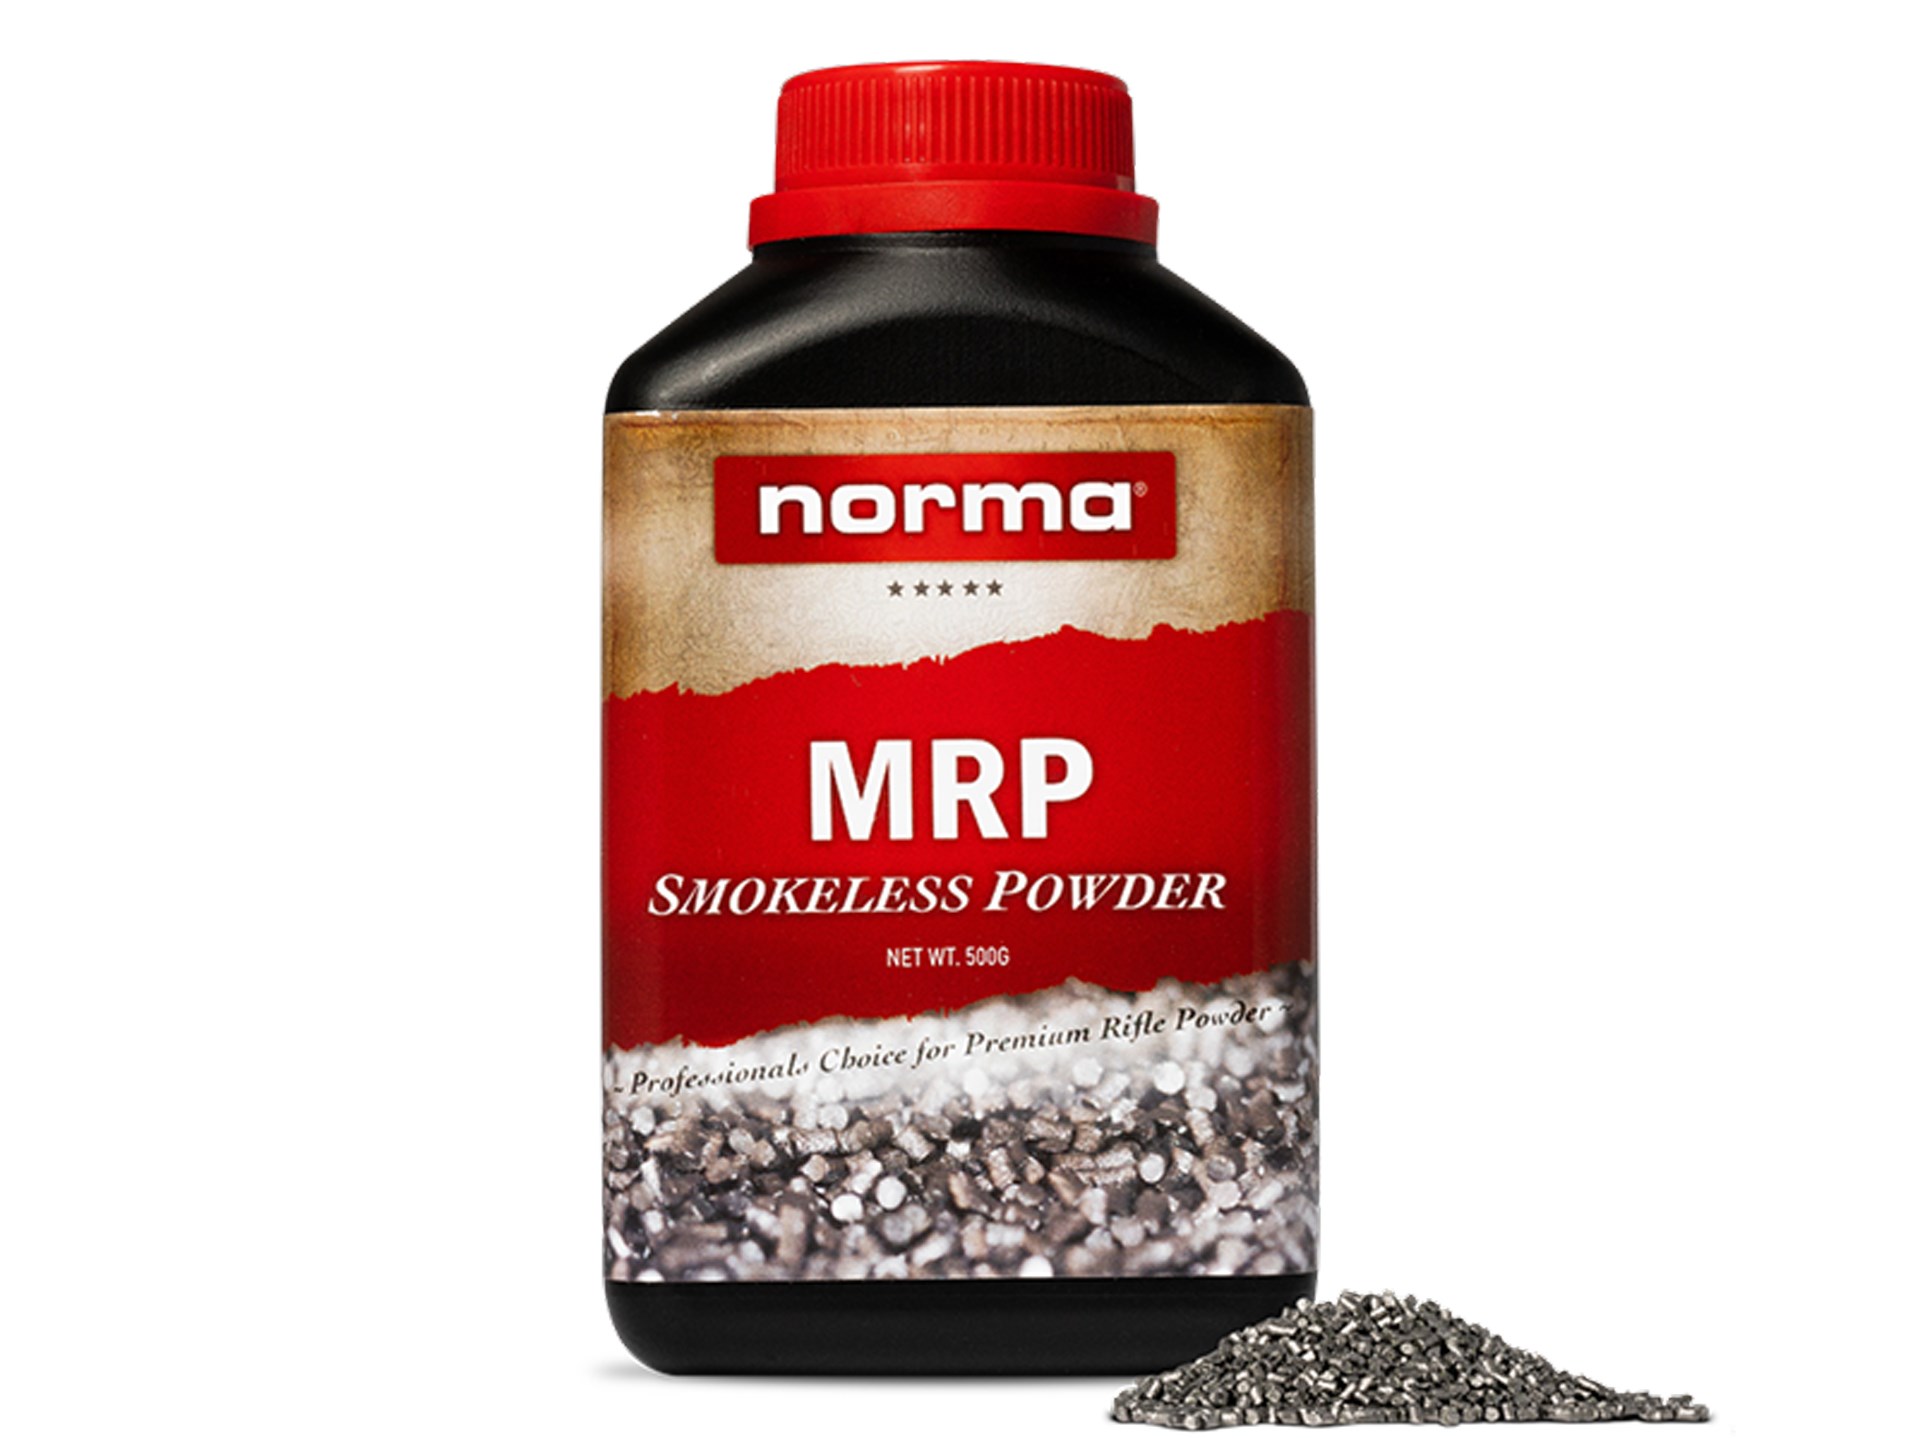 Norma MRP smokeless powder jug jar container black jug gunpowder red label red cap